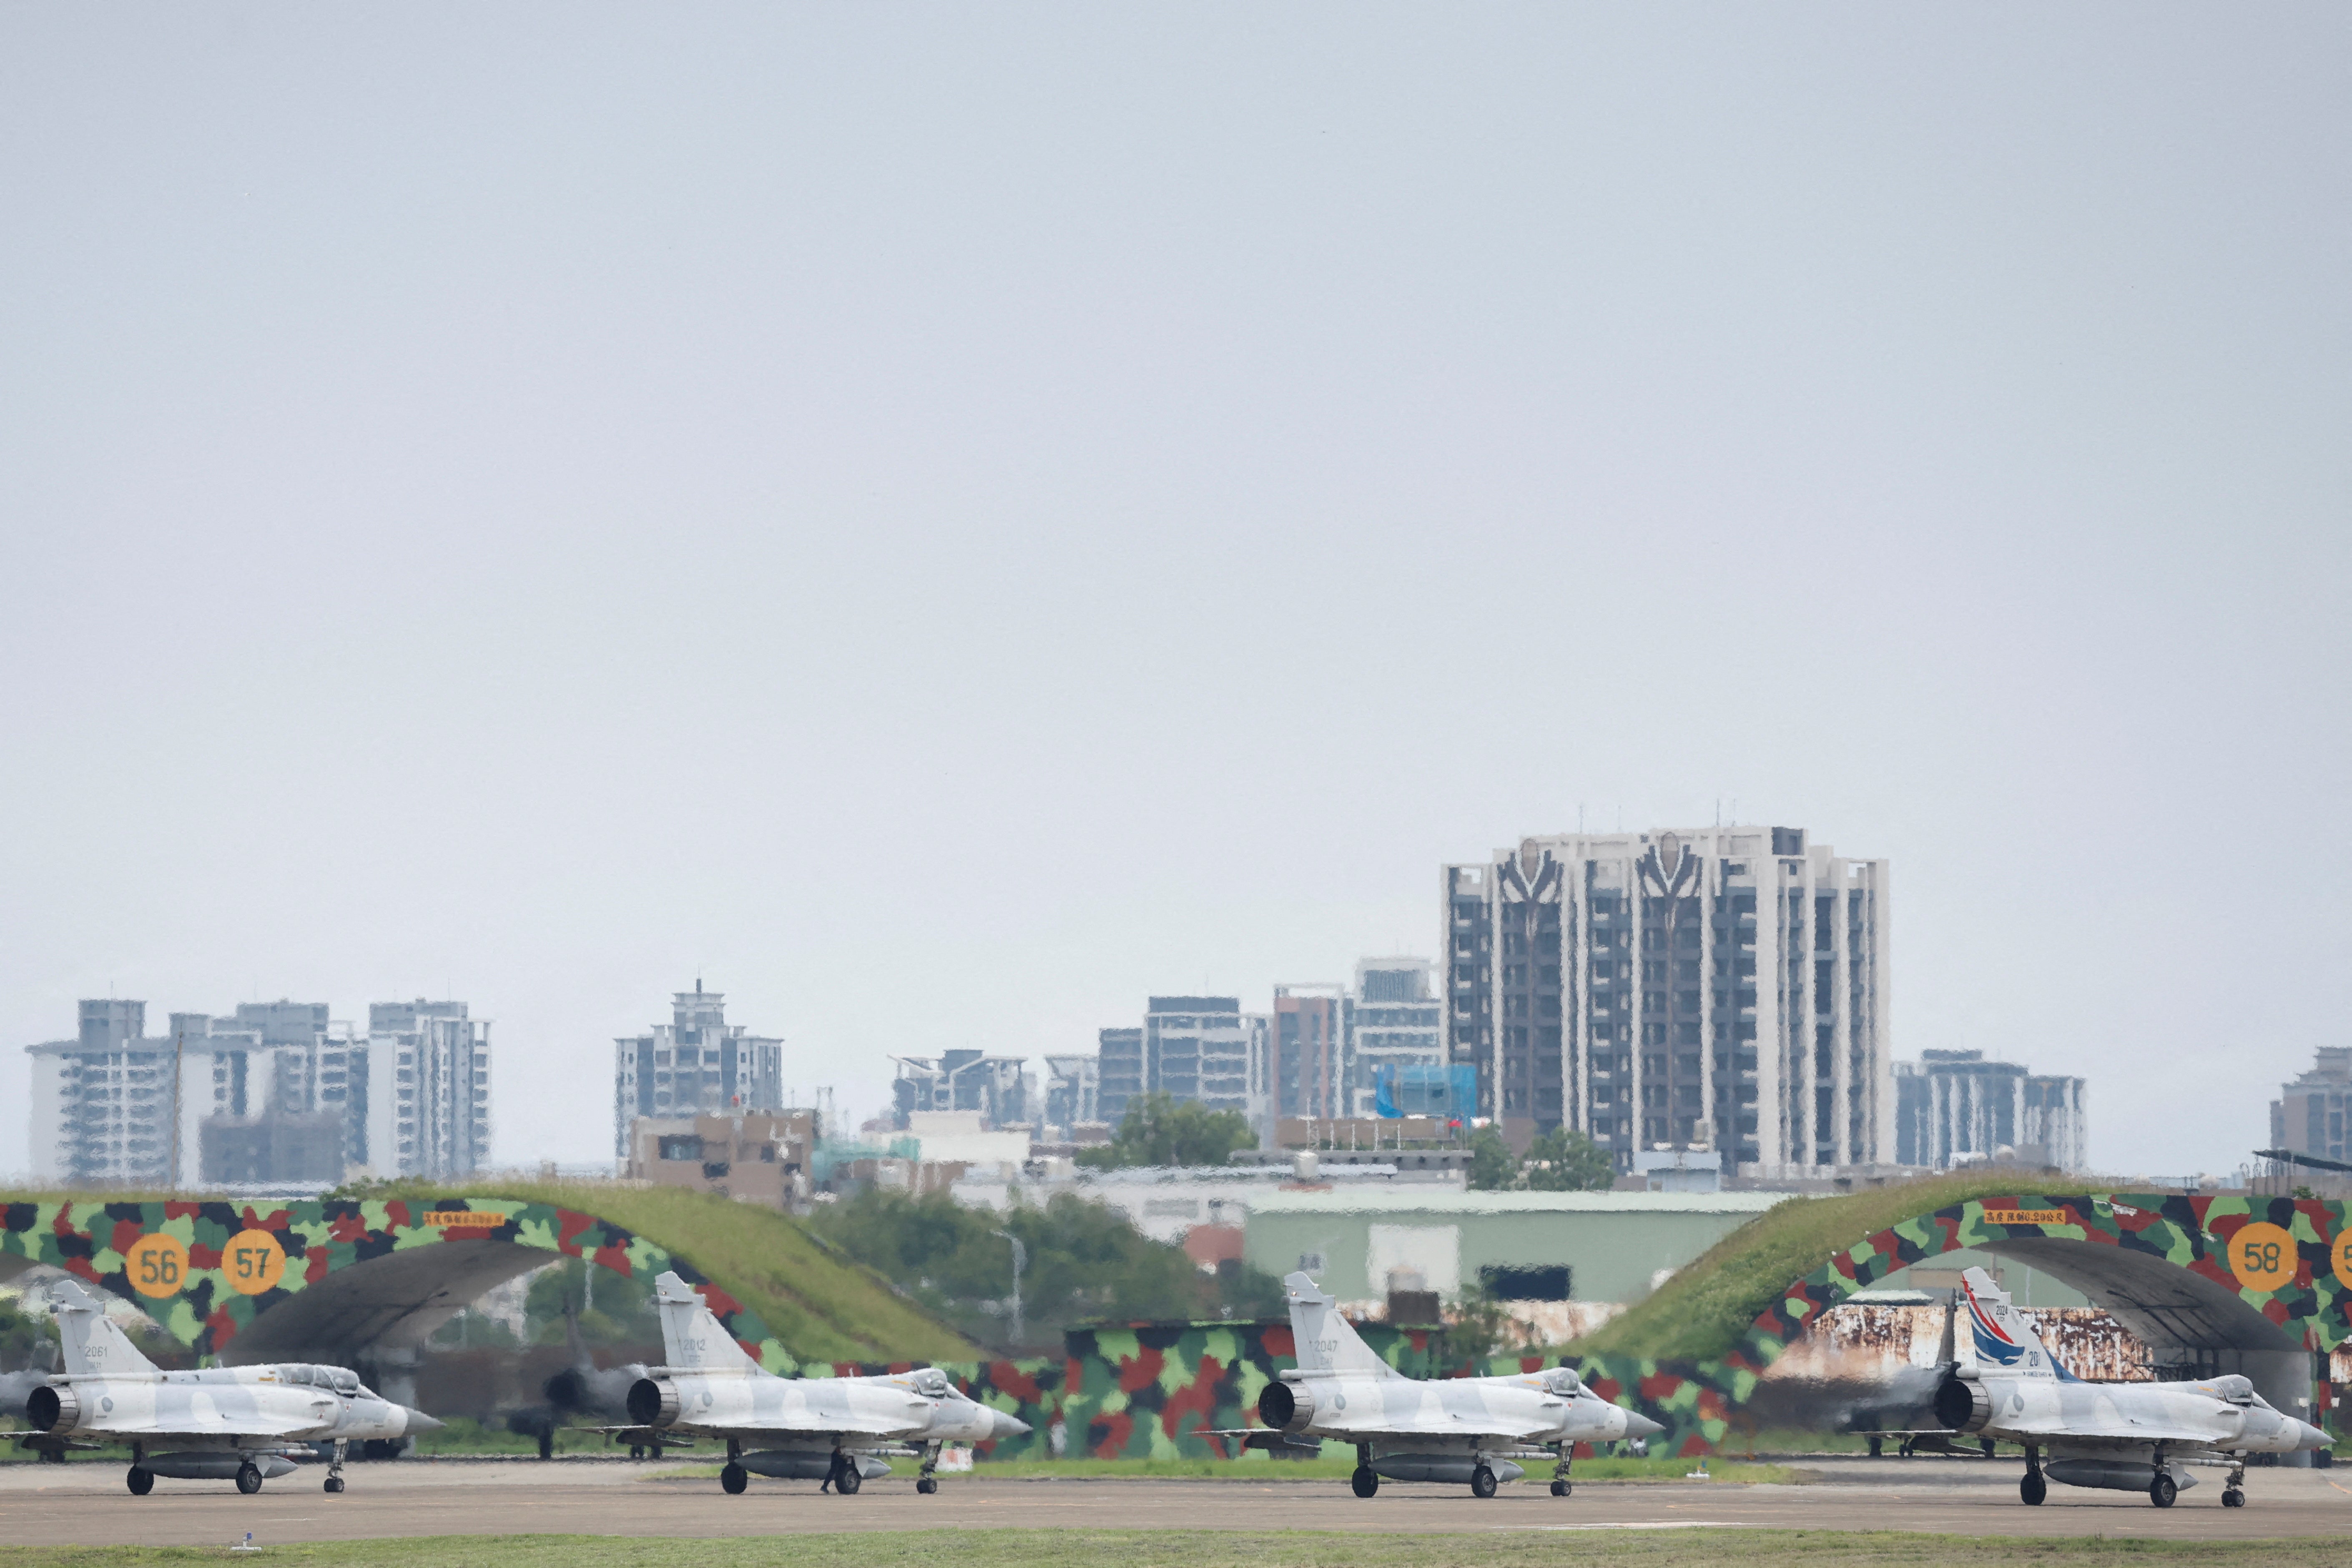 Taiwan Air Force Mirage 2000-5 aircraft prepare to take off at Hsinchu Air Base, in Hsinchu